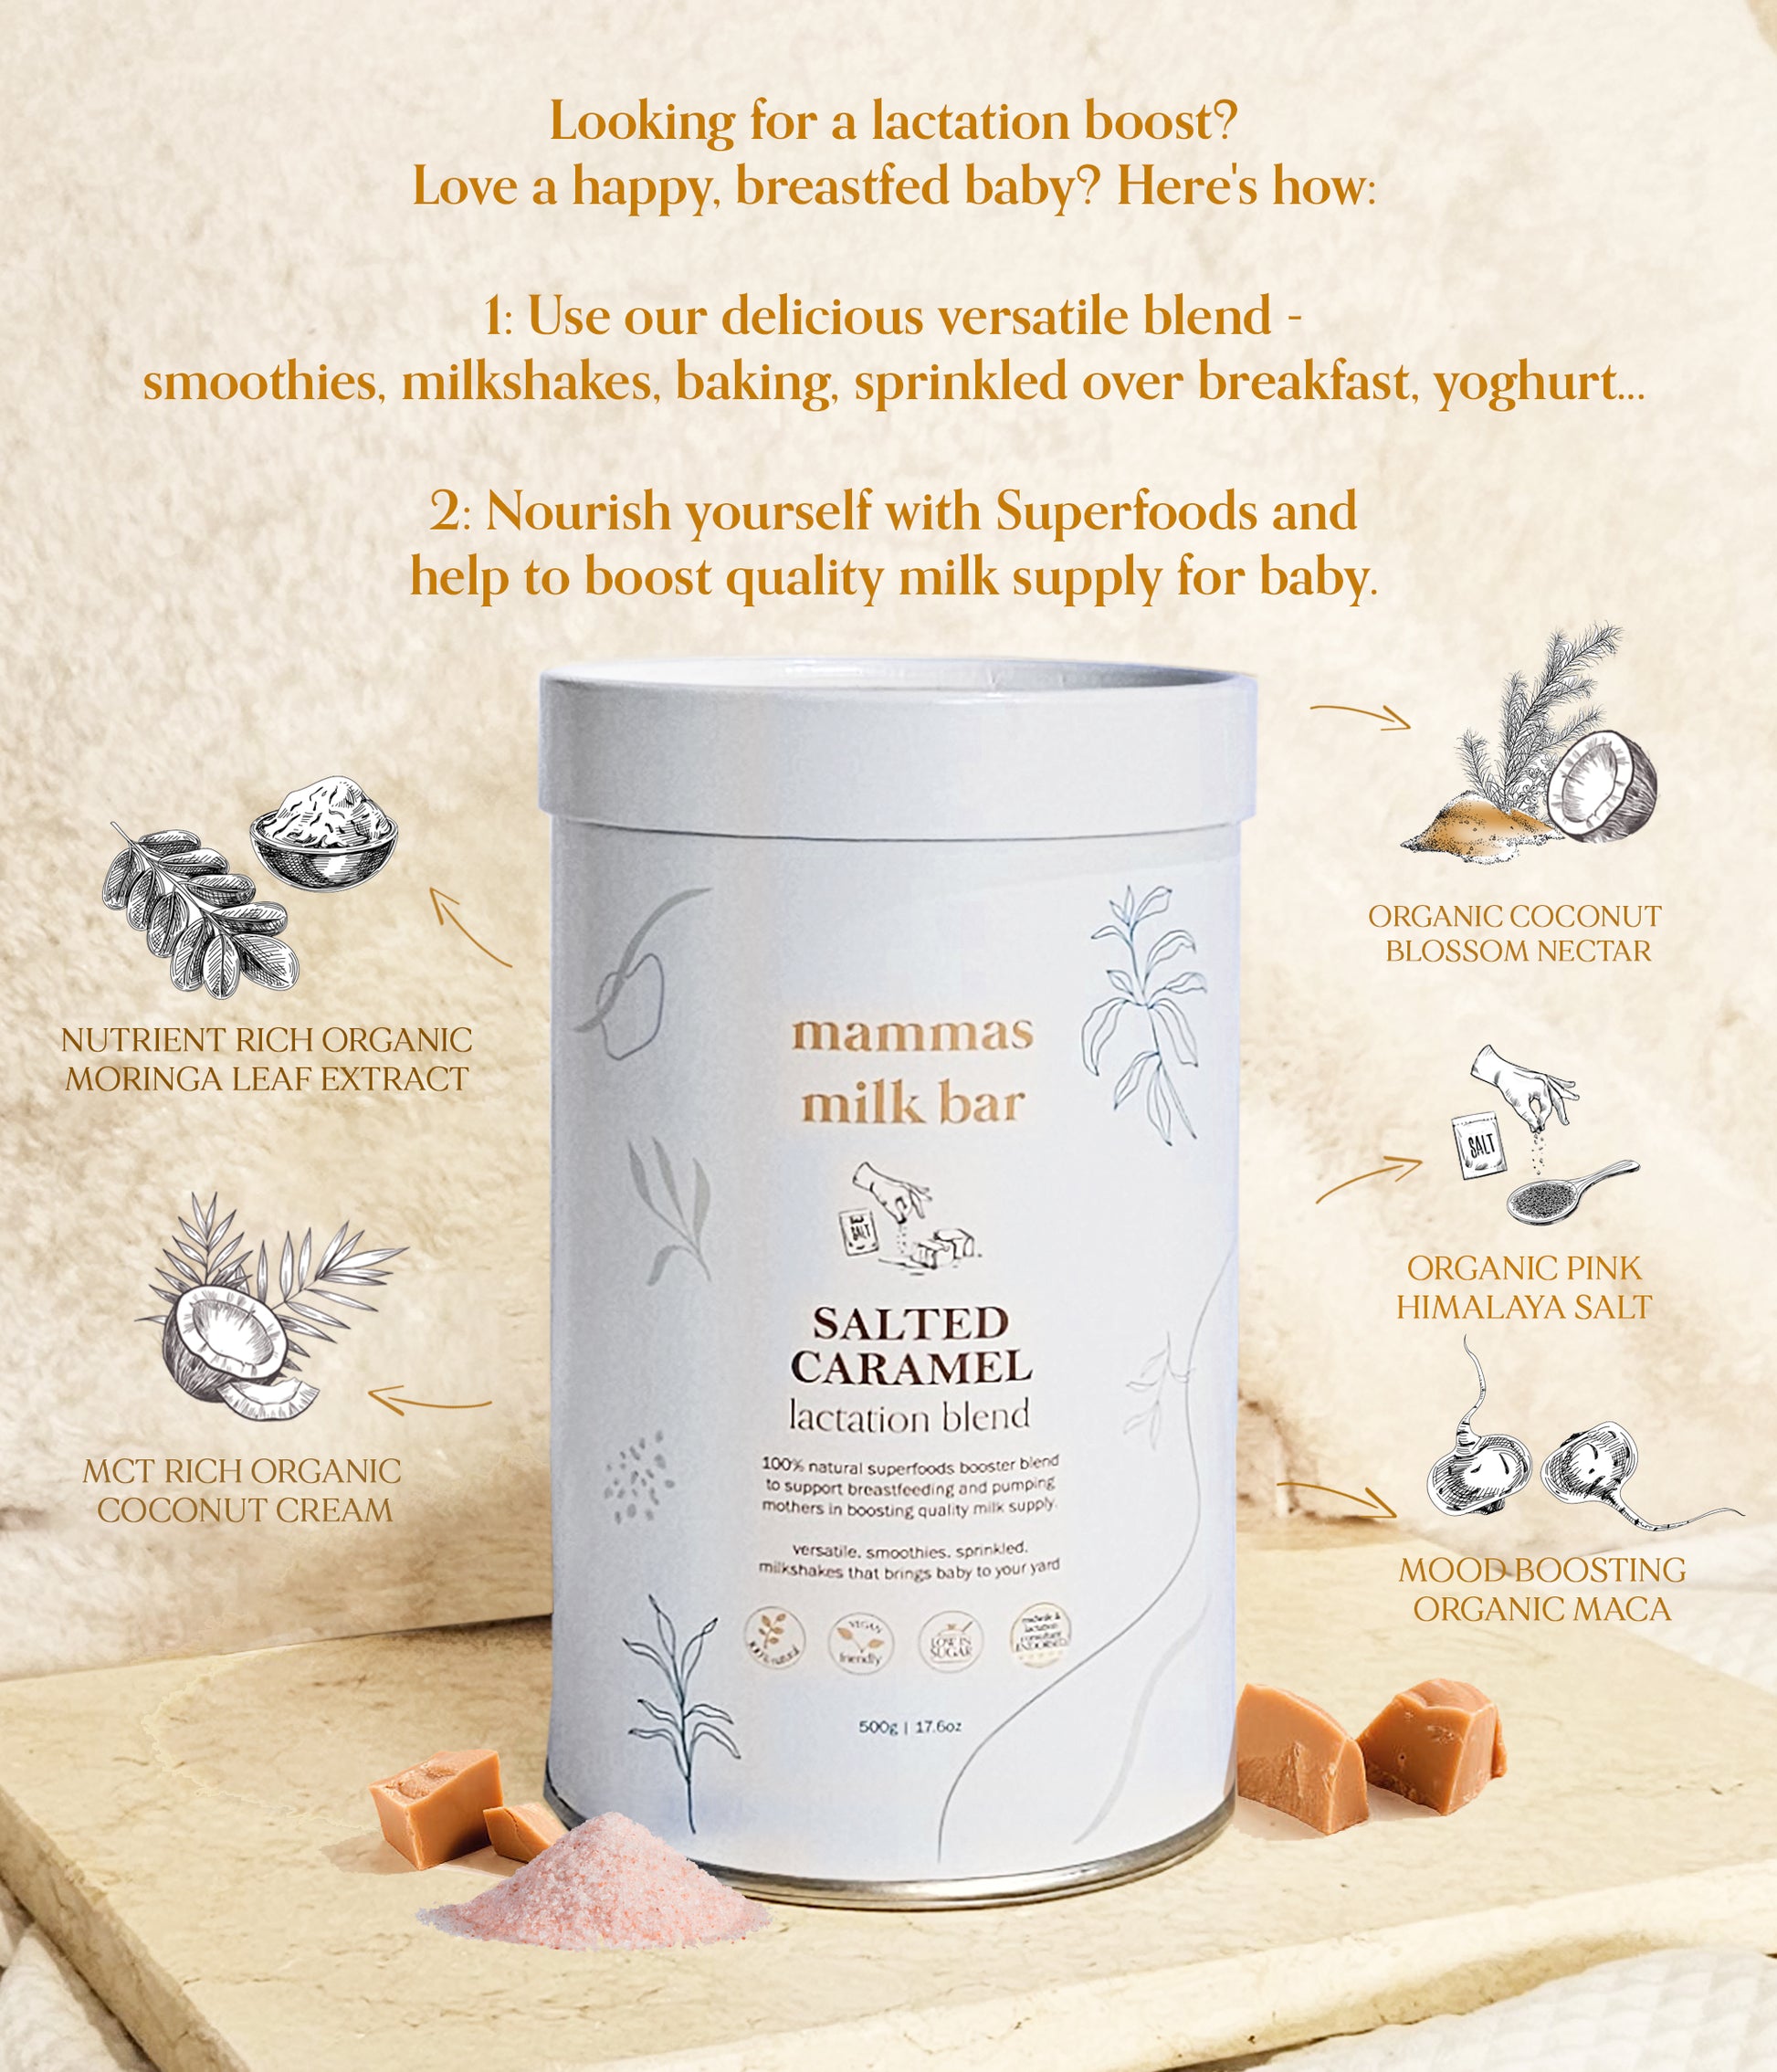 Salted caramel lactation blend mammas milk bar nz - Flourish Maternity online mum and baby shop New Zealand